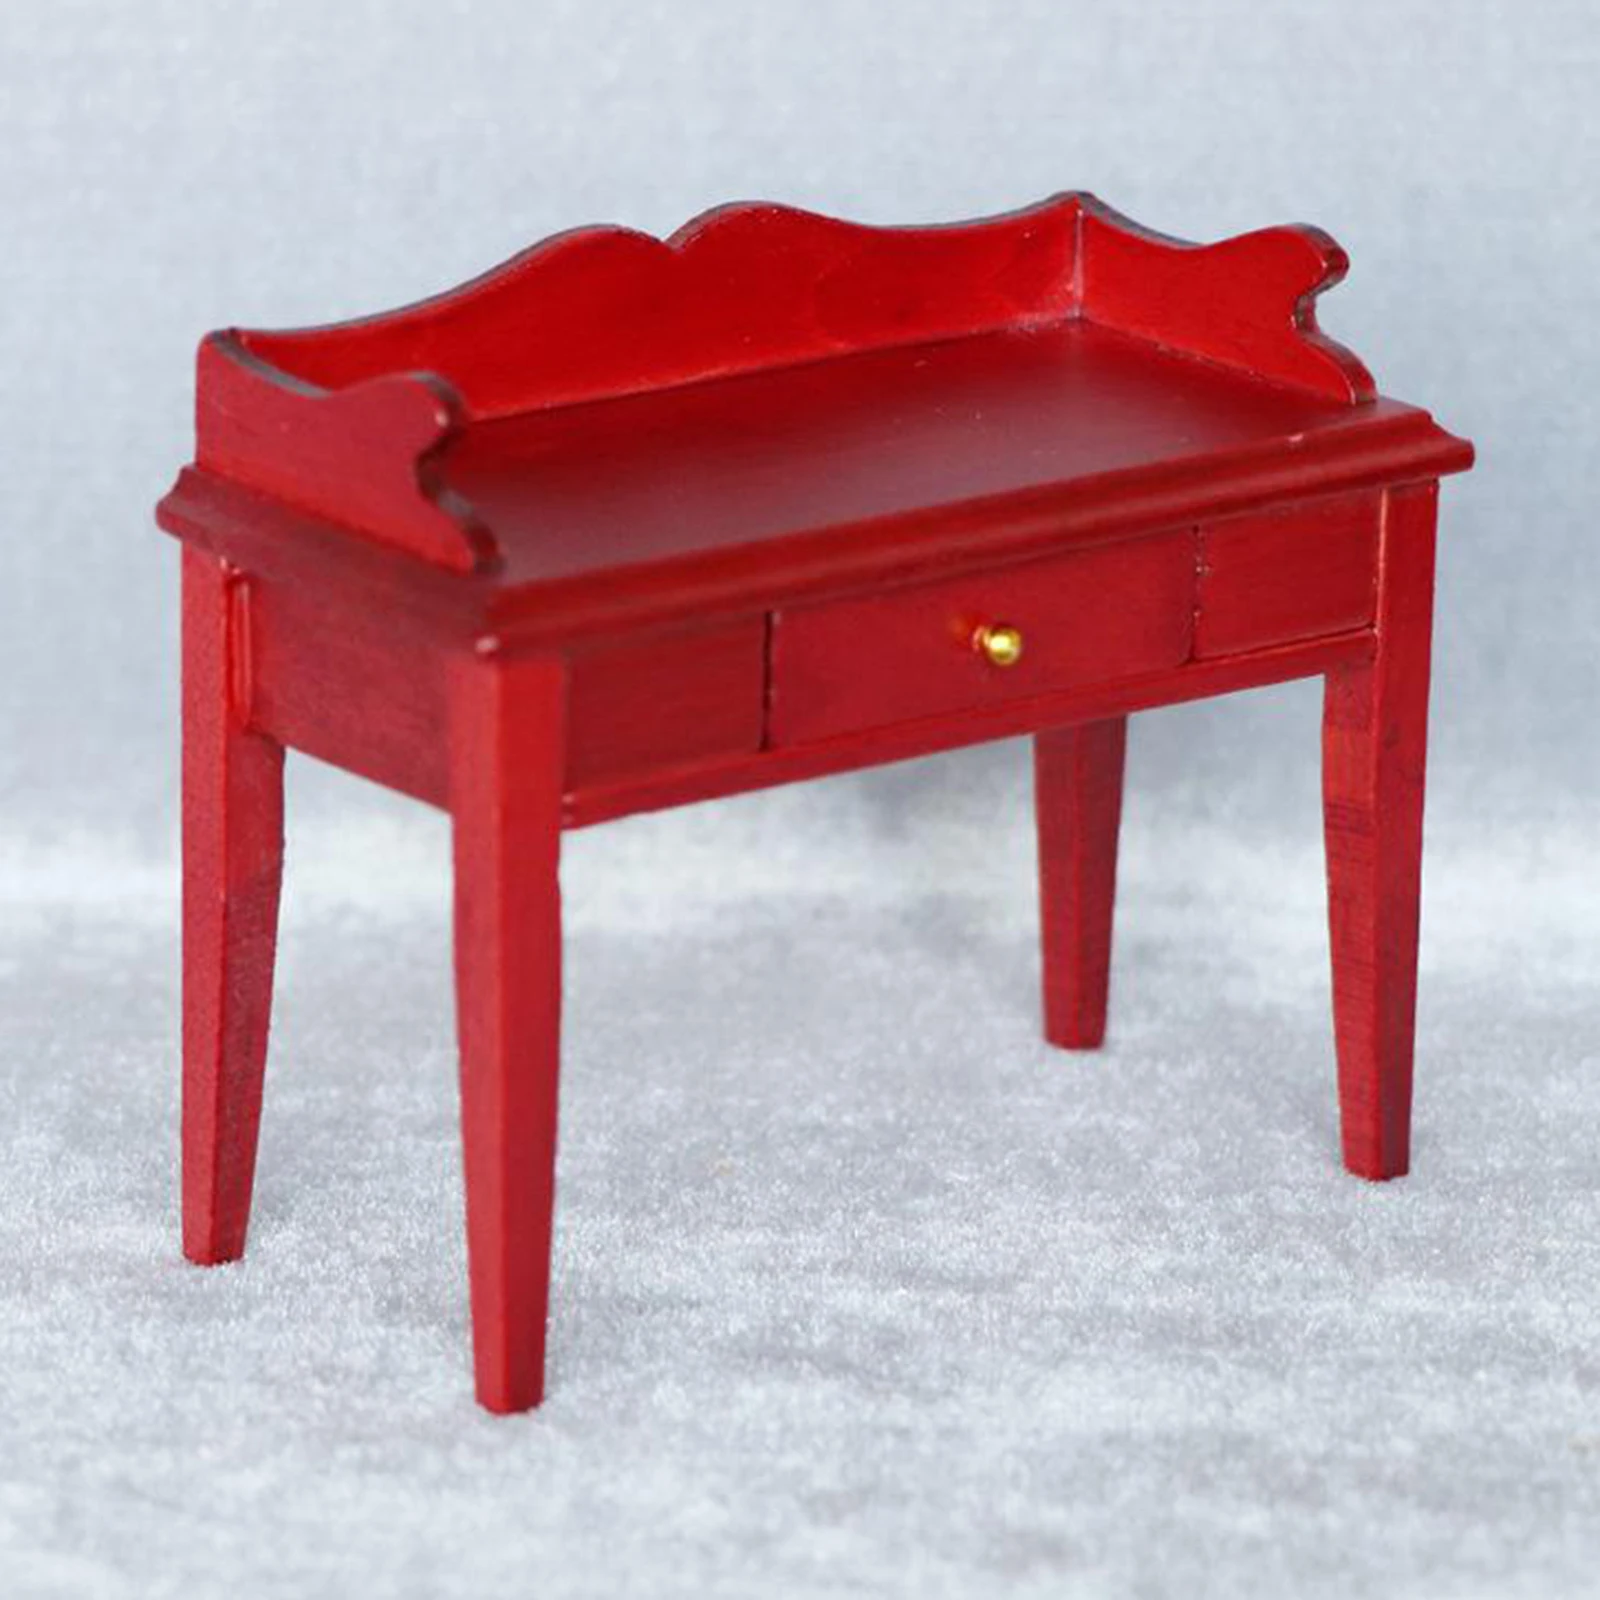 Dollhouse Handmade Birch Wood Desk Table Miniature Set for 1:12 Dolls House